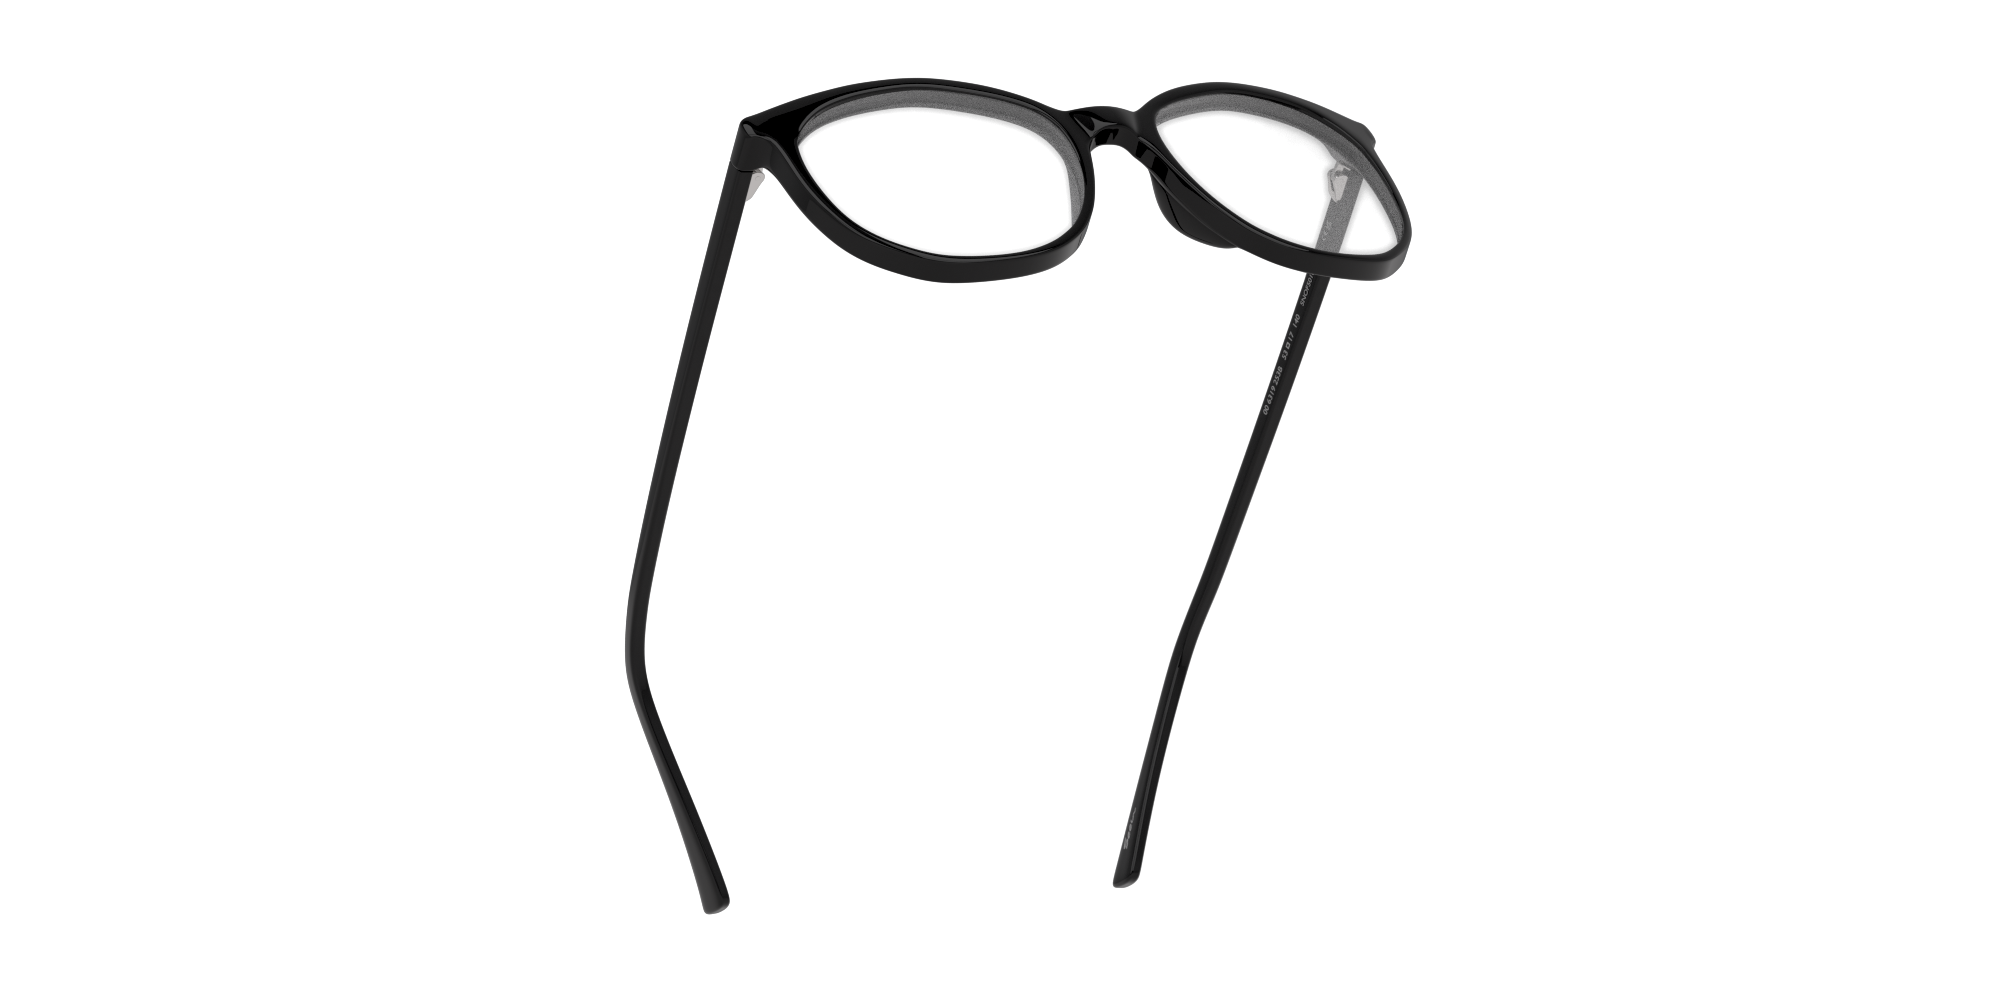 Bottom_Up Seen SN OF5010 Glasses Transparent / Black